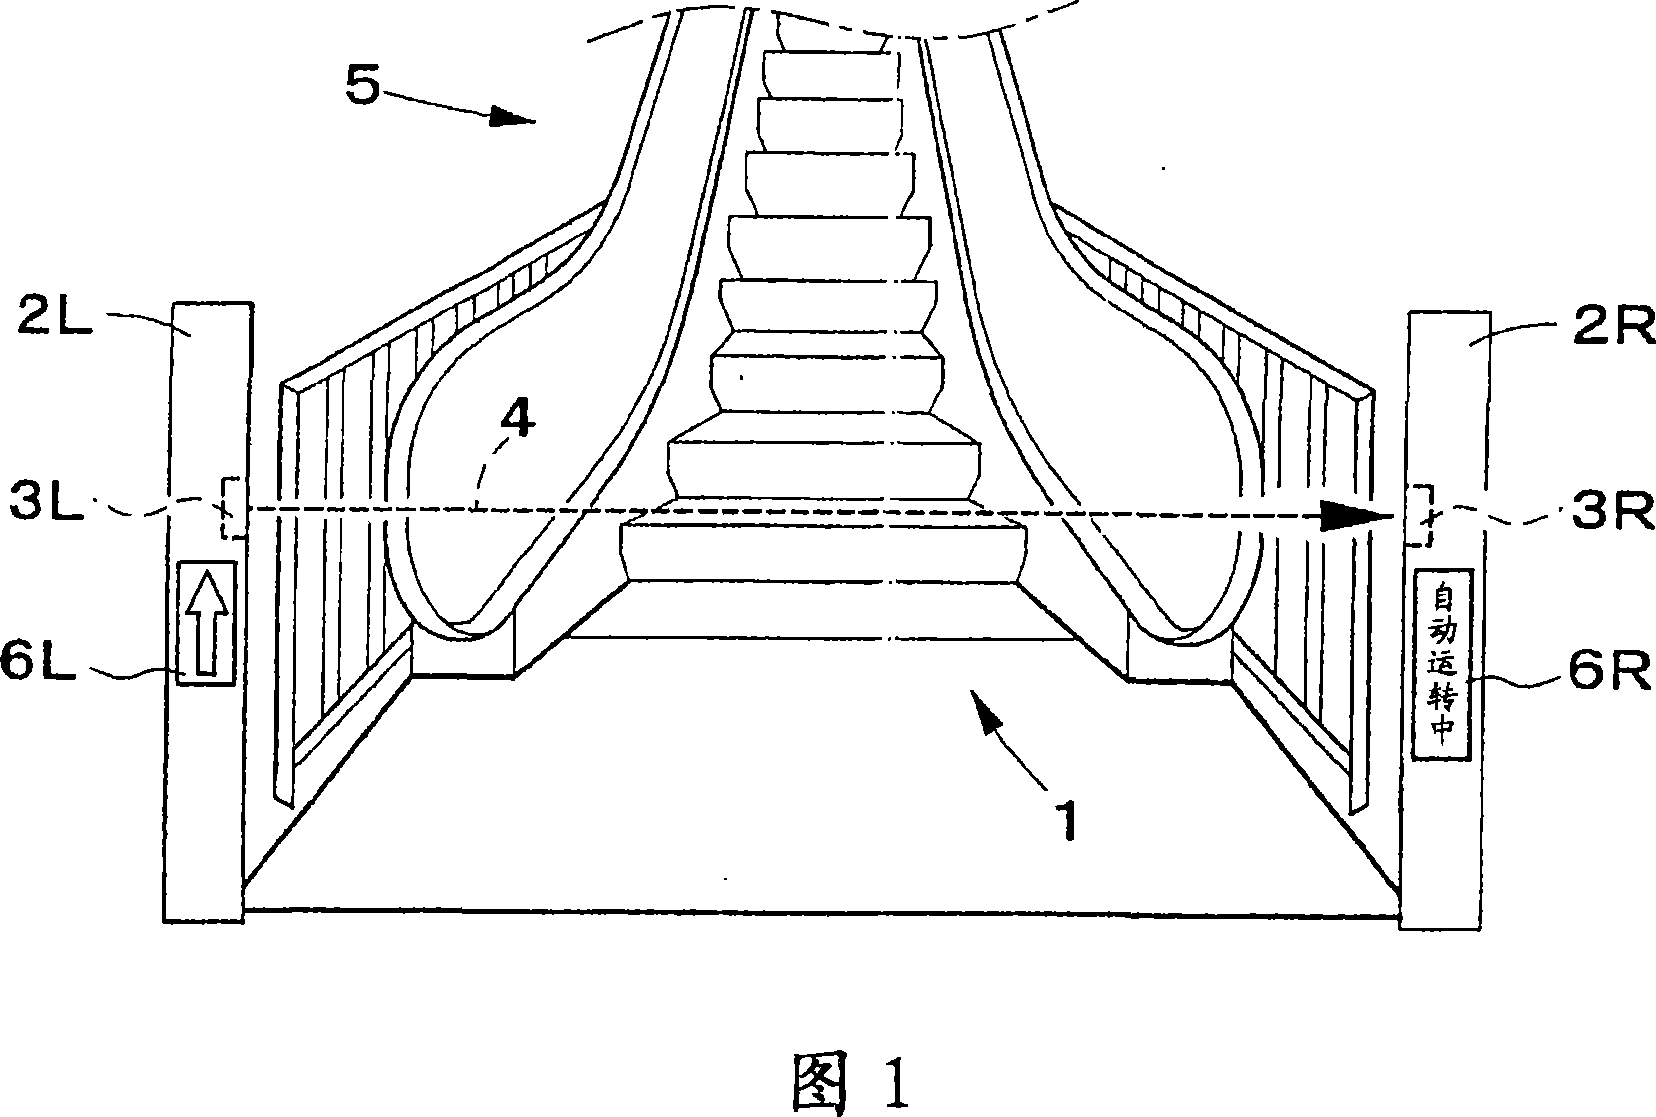 Passenger conveyor